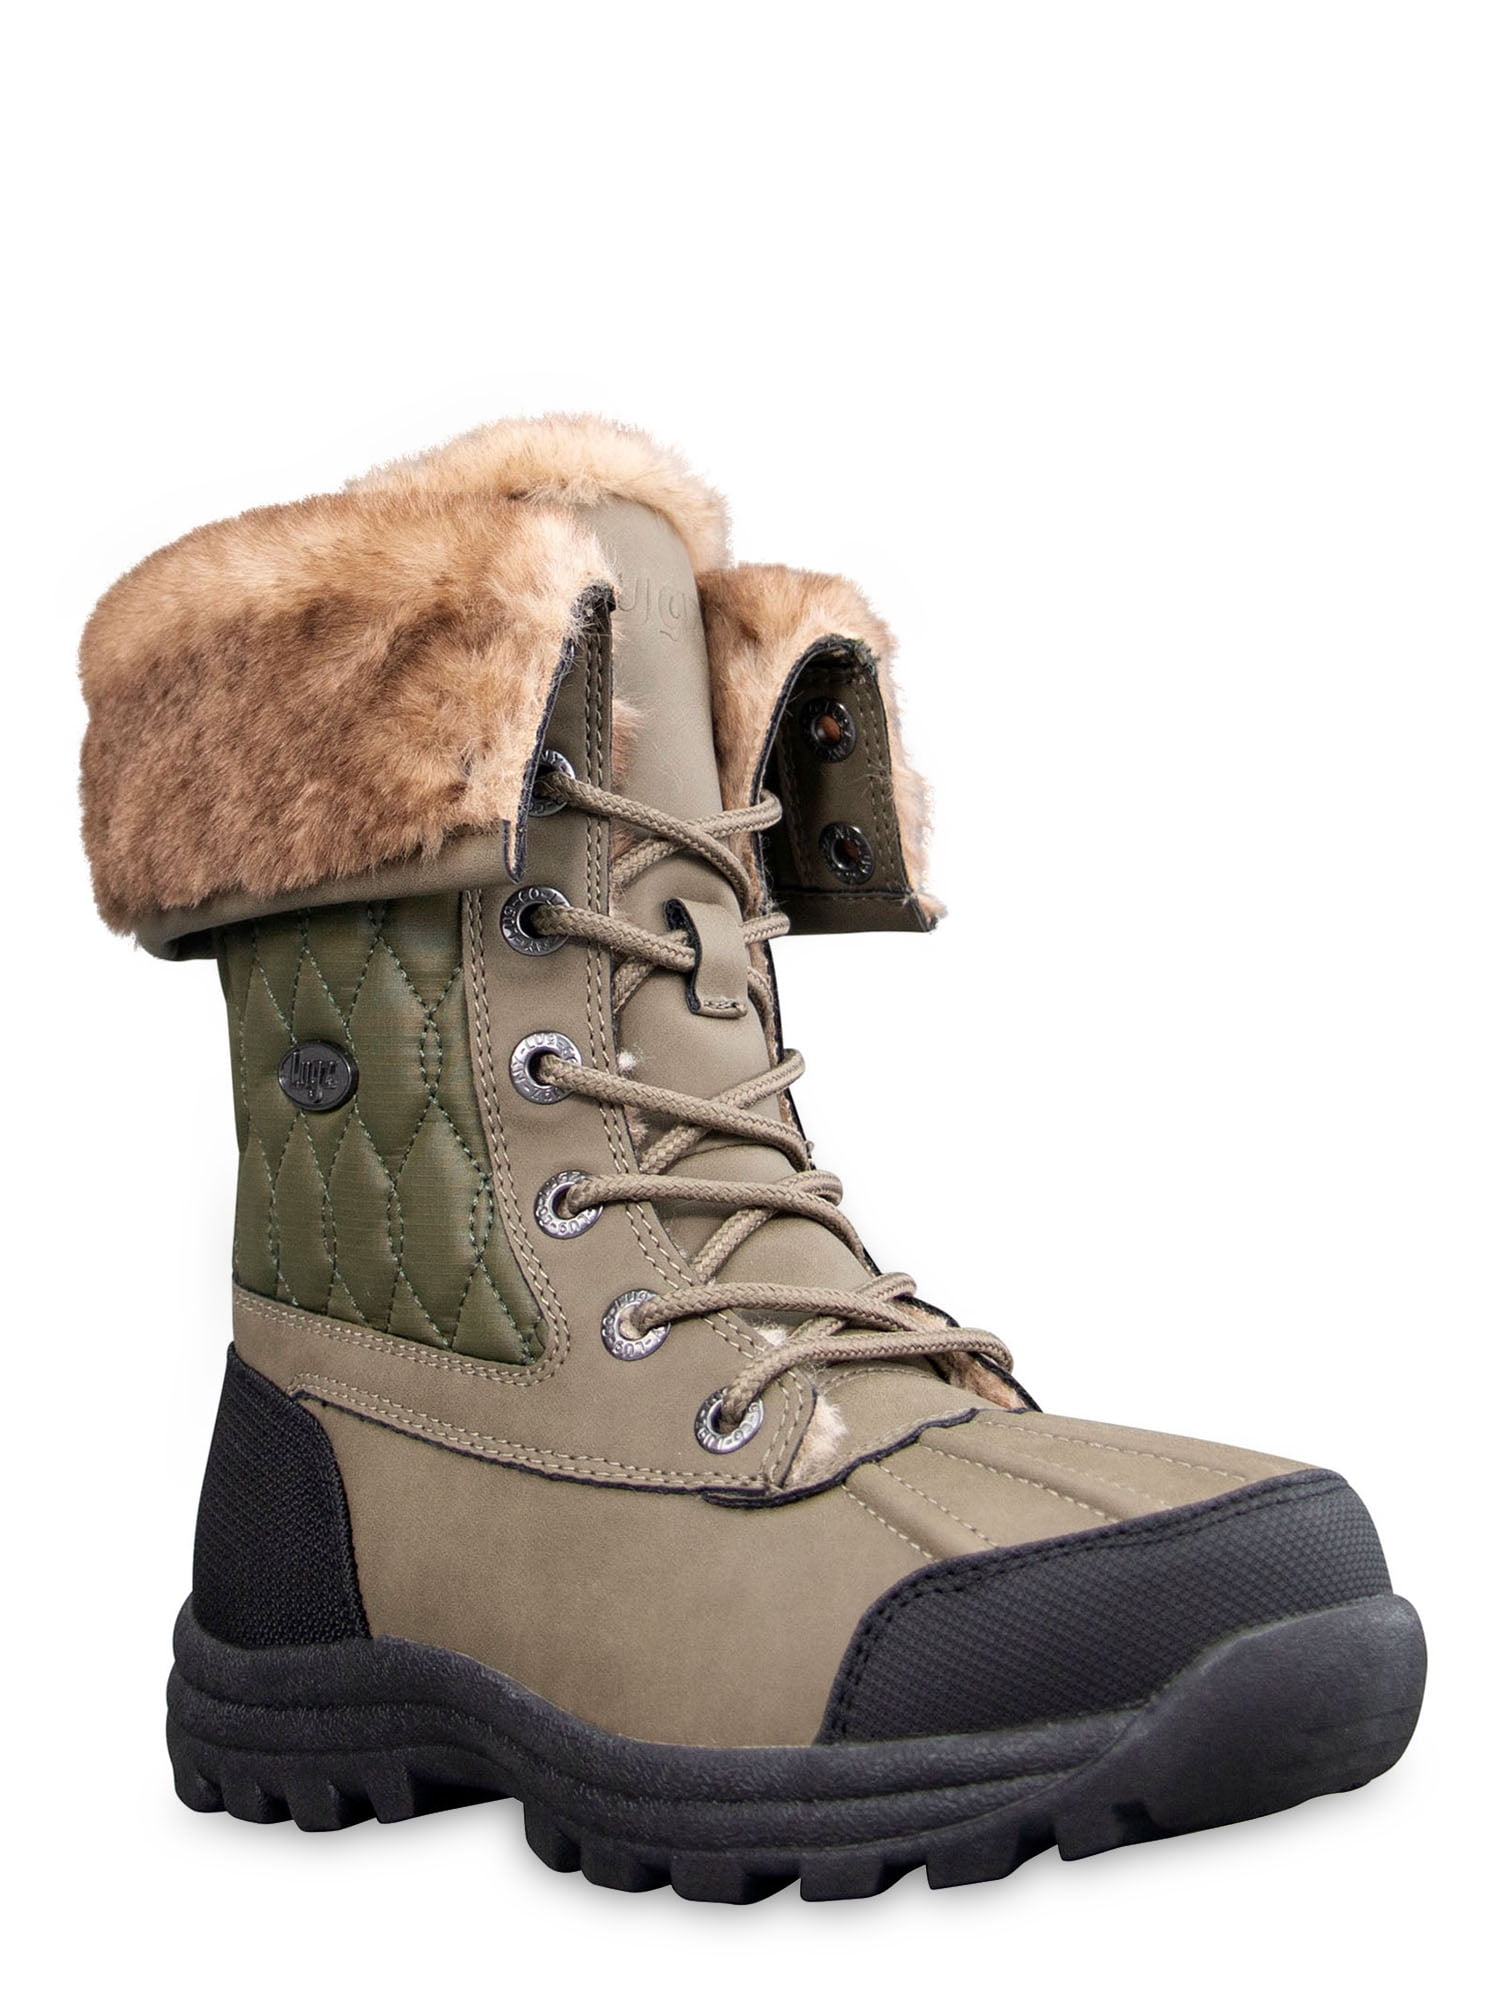 Lugz Tambora Quilted 6-Inch Boot (Women's) - Walmart.com